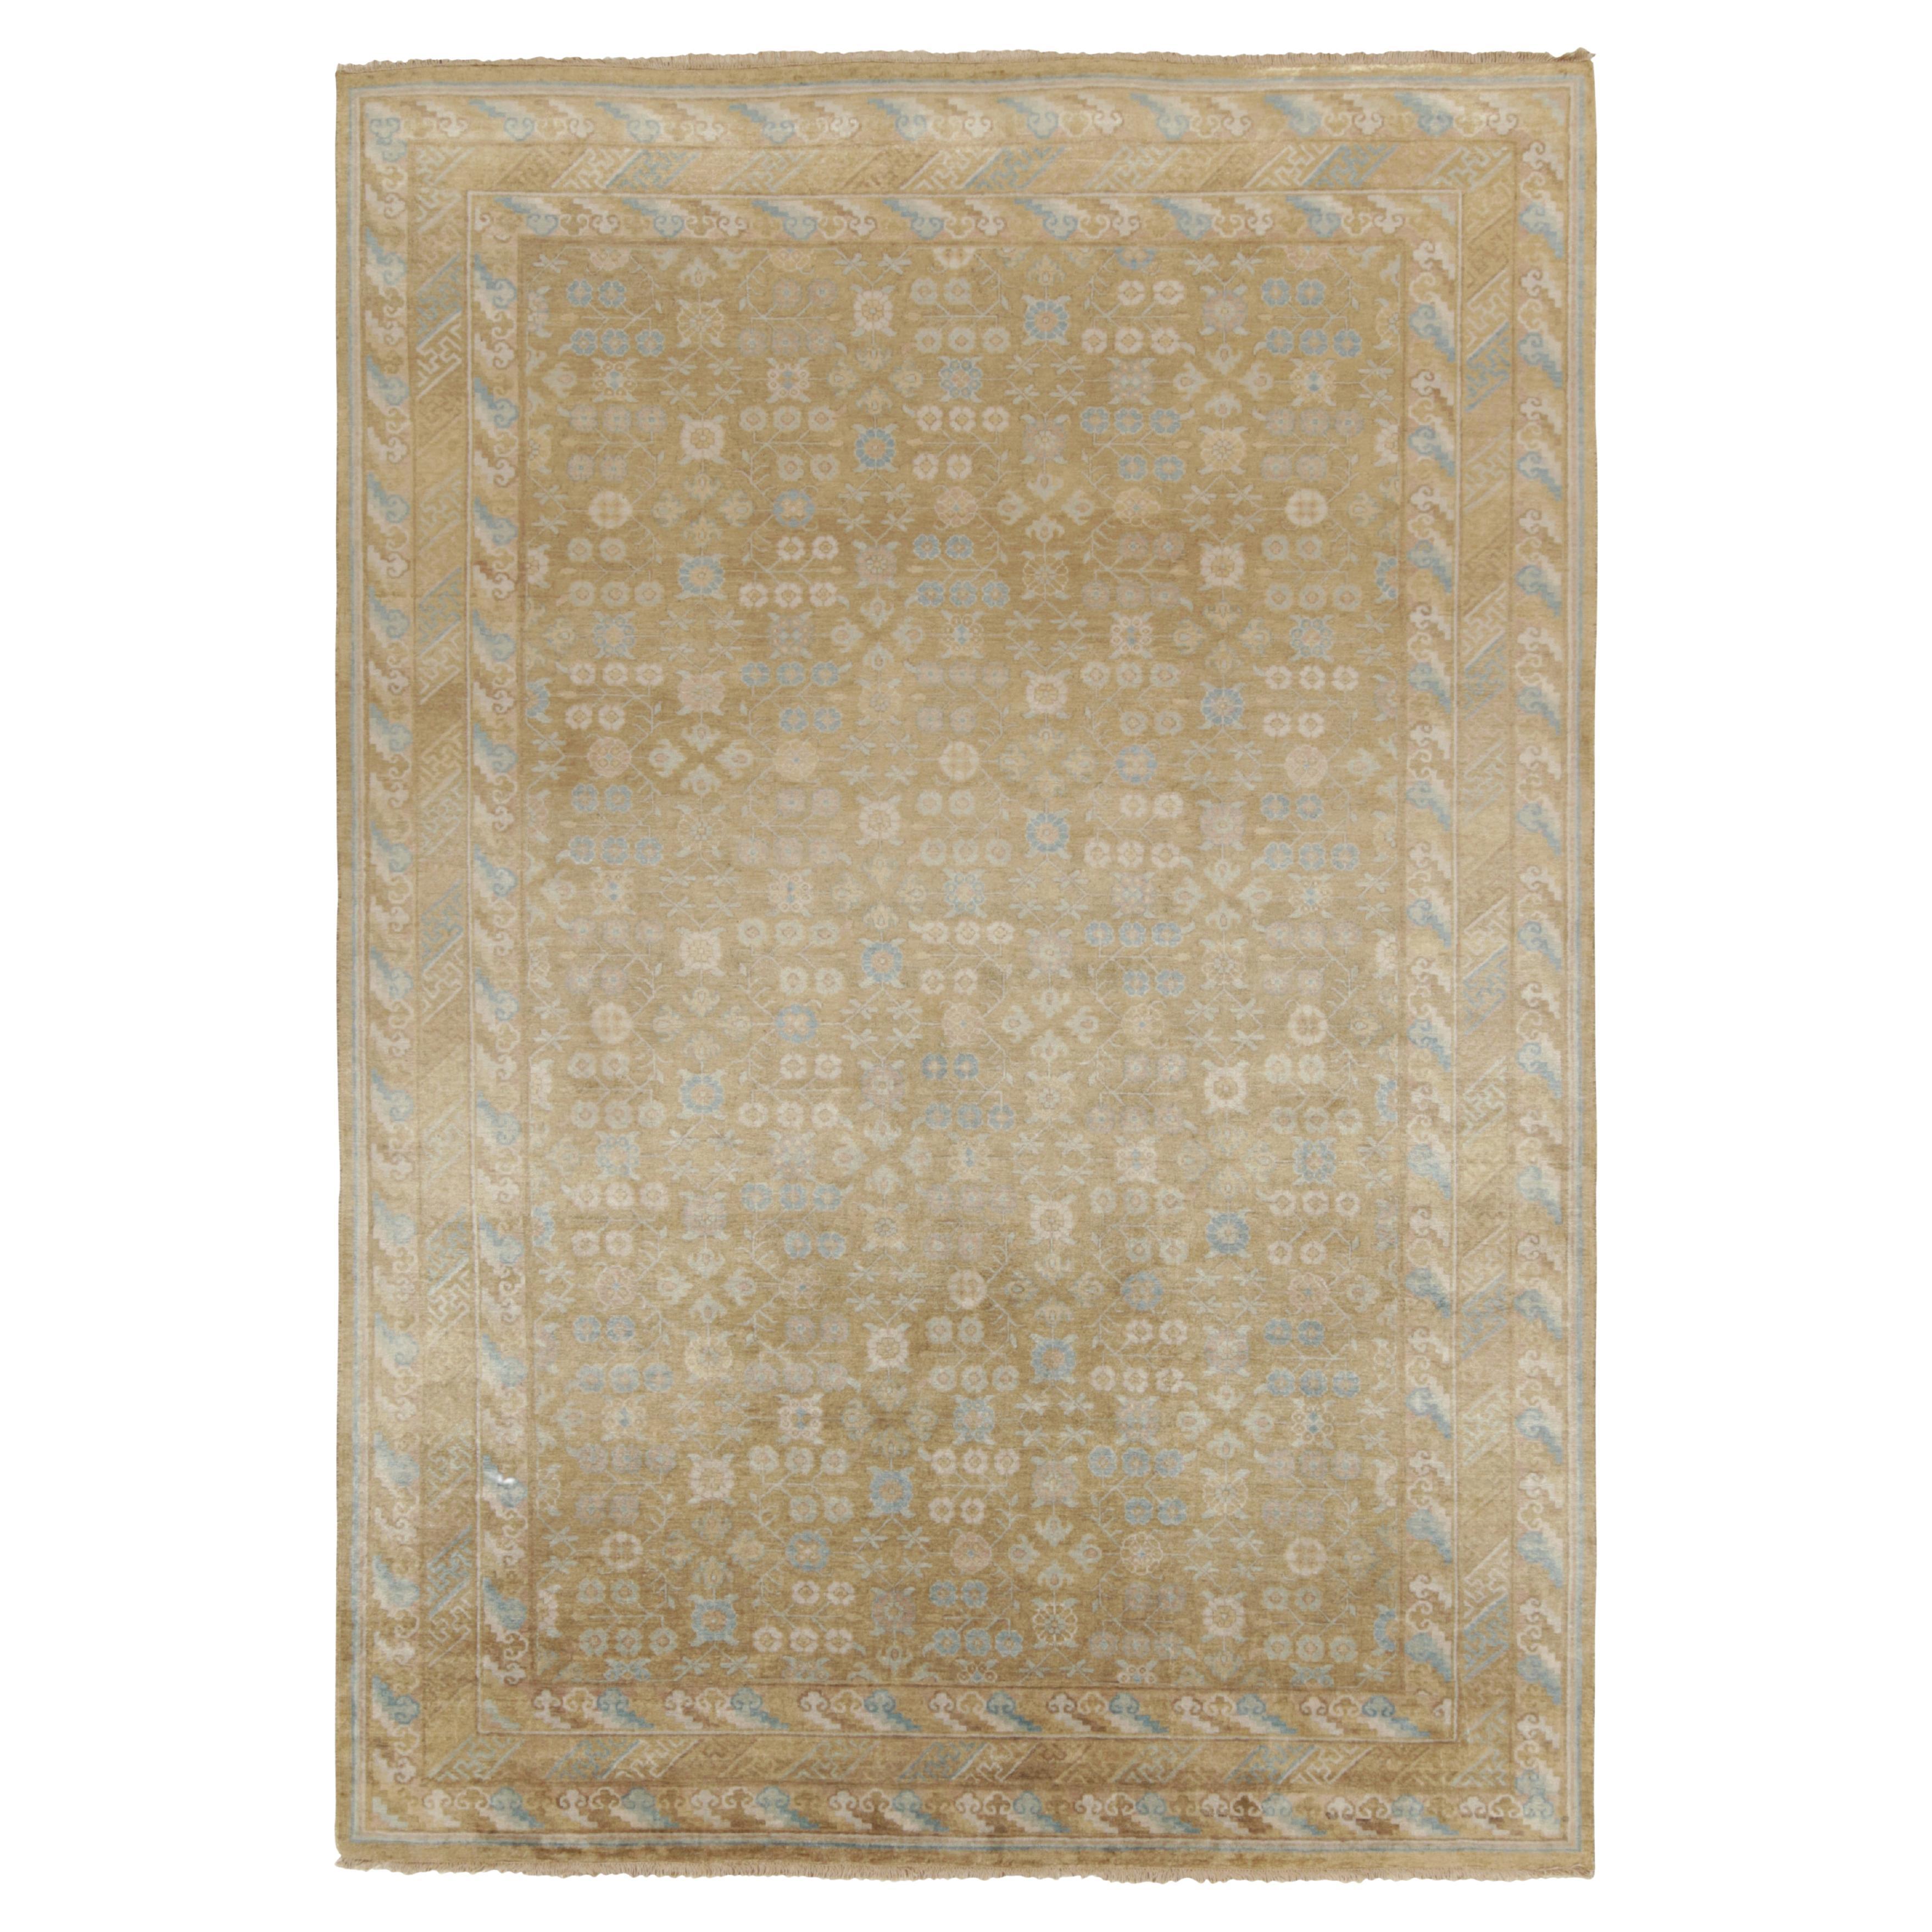 Rug & Kilim’s Khotan style rug in Gold, Beige-Brown and Blue Patterns